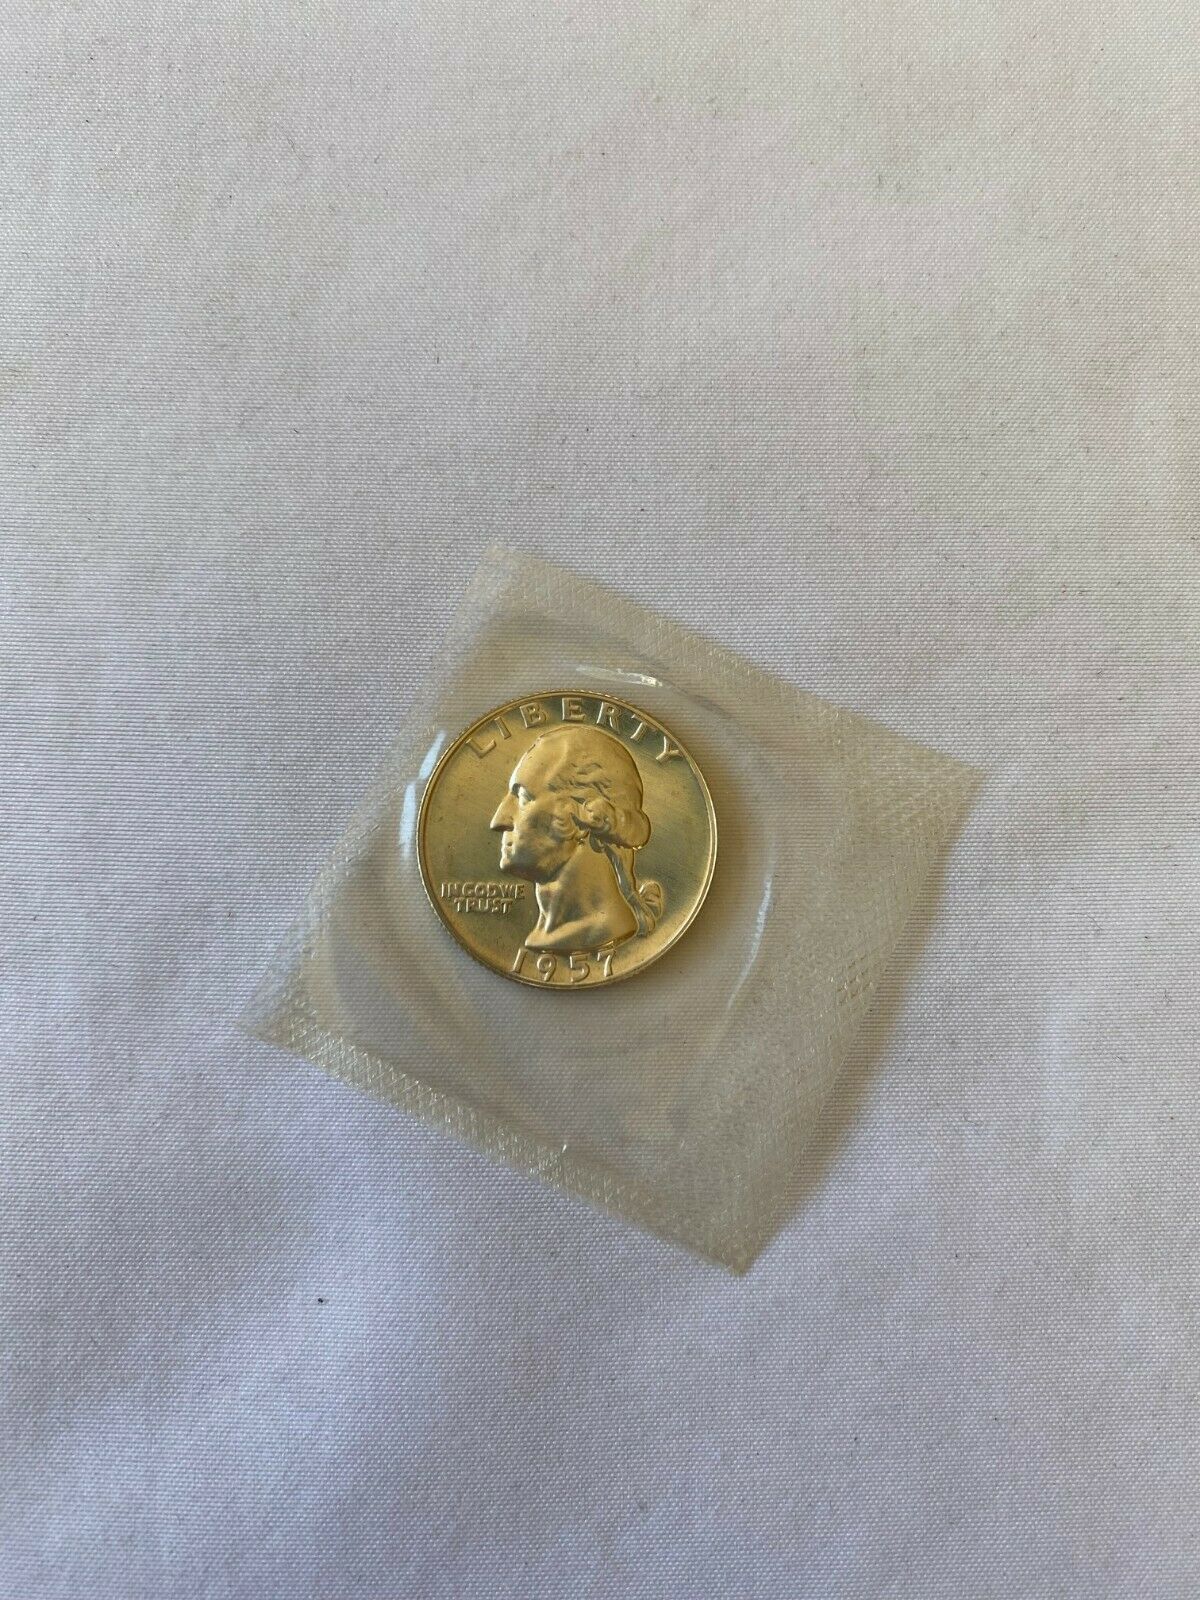 1957 Washington Quarter 25c Silver Proof UNC Coin Sealed in Original Mint Cello